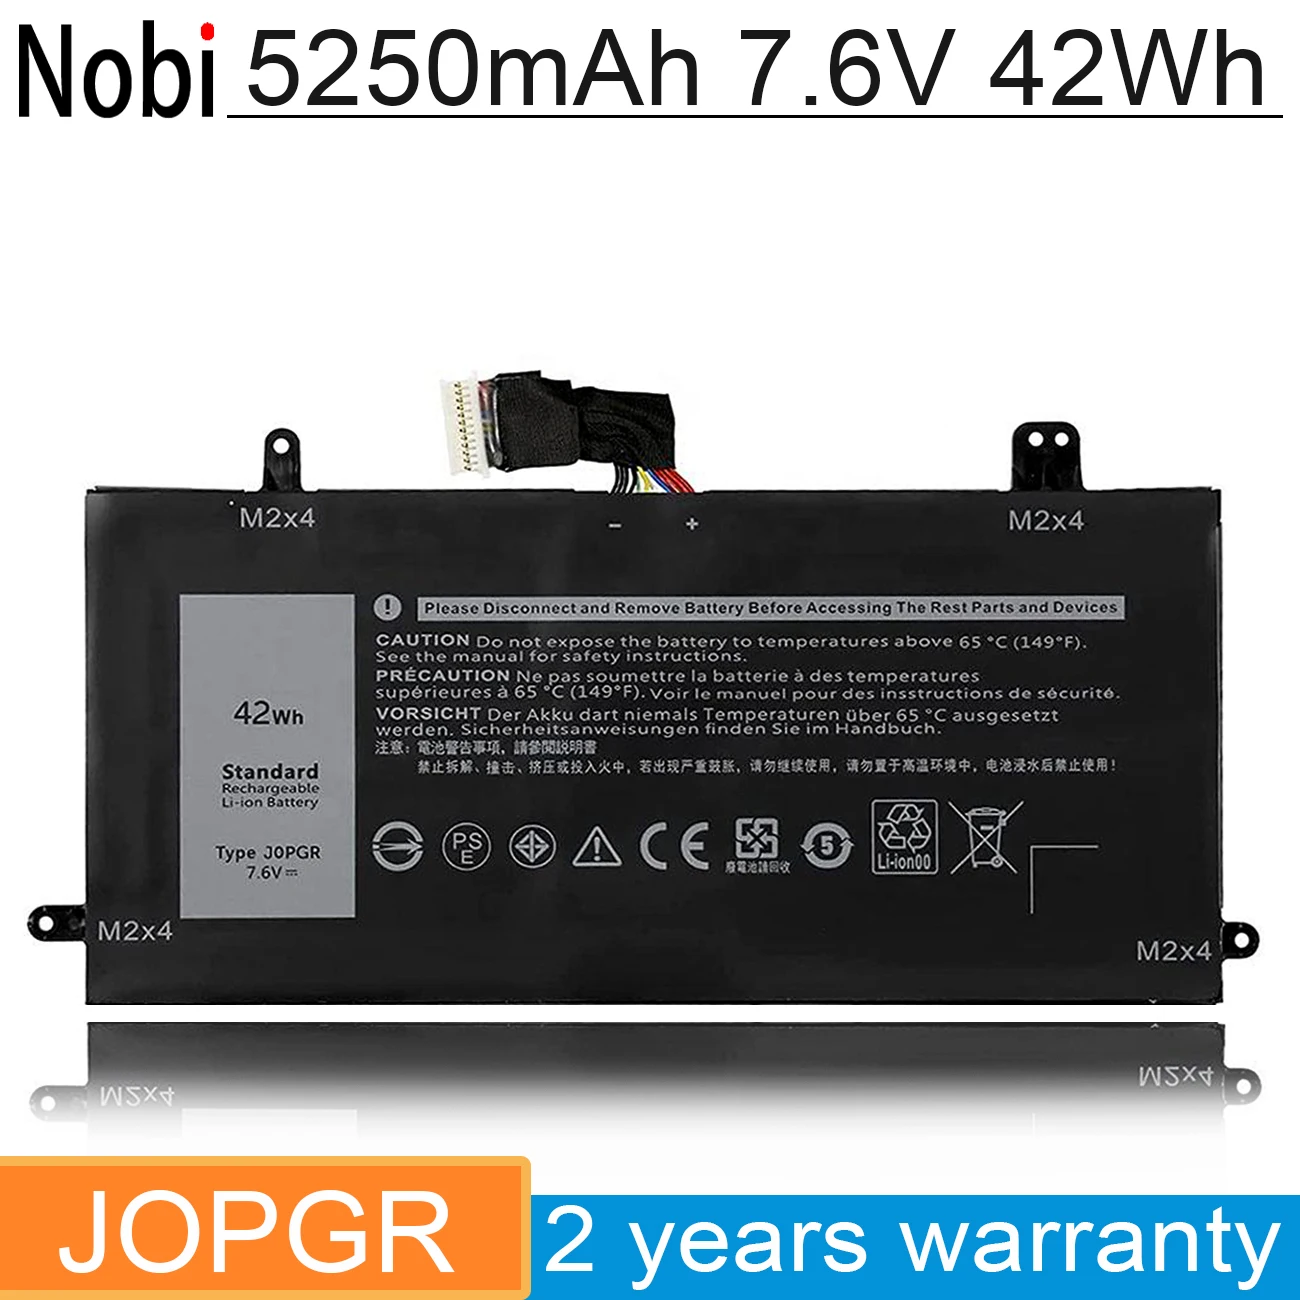 

Nobi 7.6V 42Wh J0PGR Laptop Battery For Dell Latitude 5285 5290 T17G 1WND8 JOPGR X16TW T17G001 Free 24 Monthes Warrant